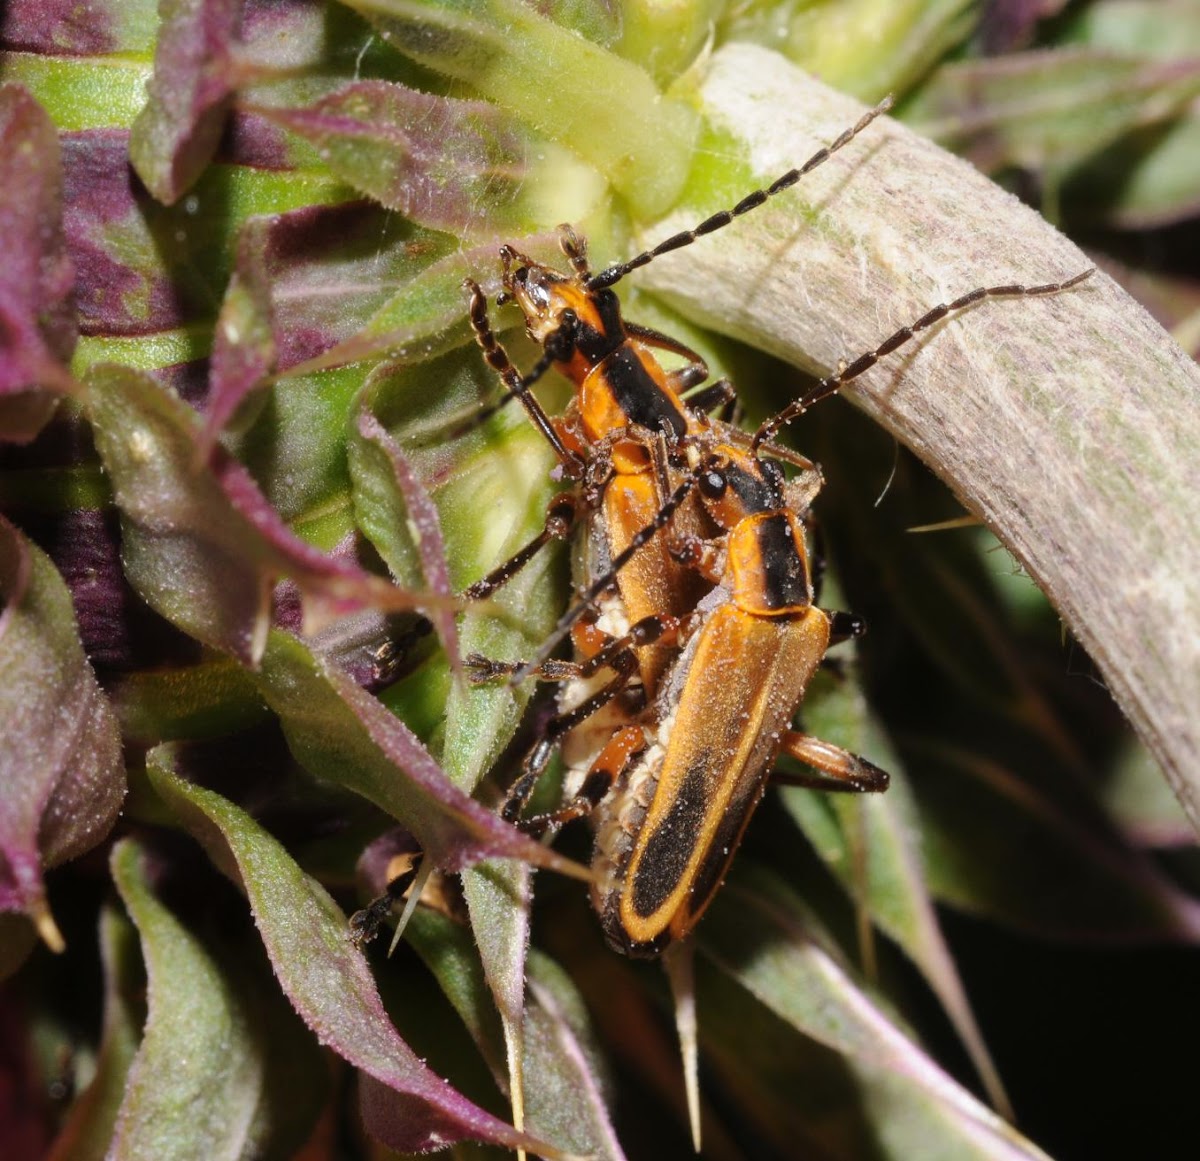 Margined leatherwing beetles (mating pair)